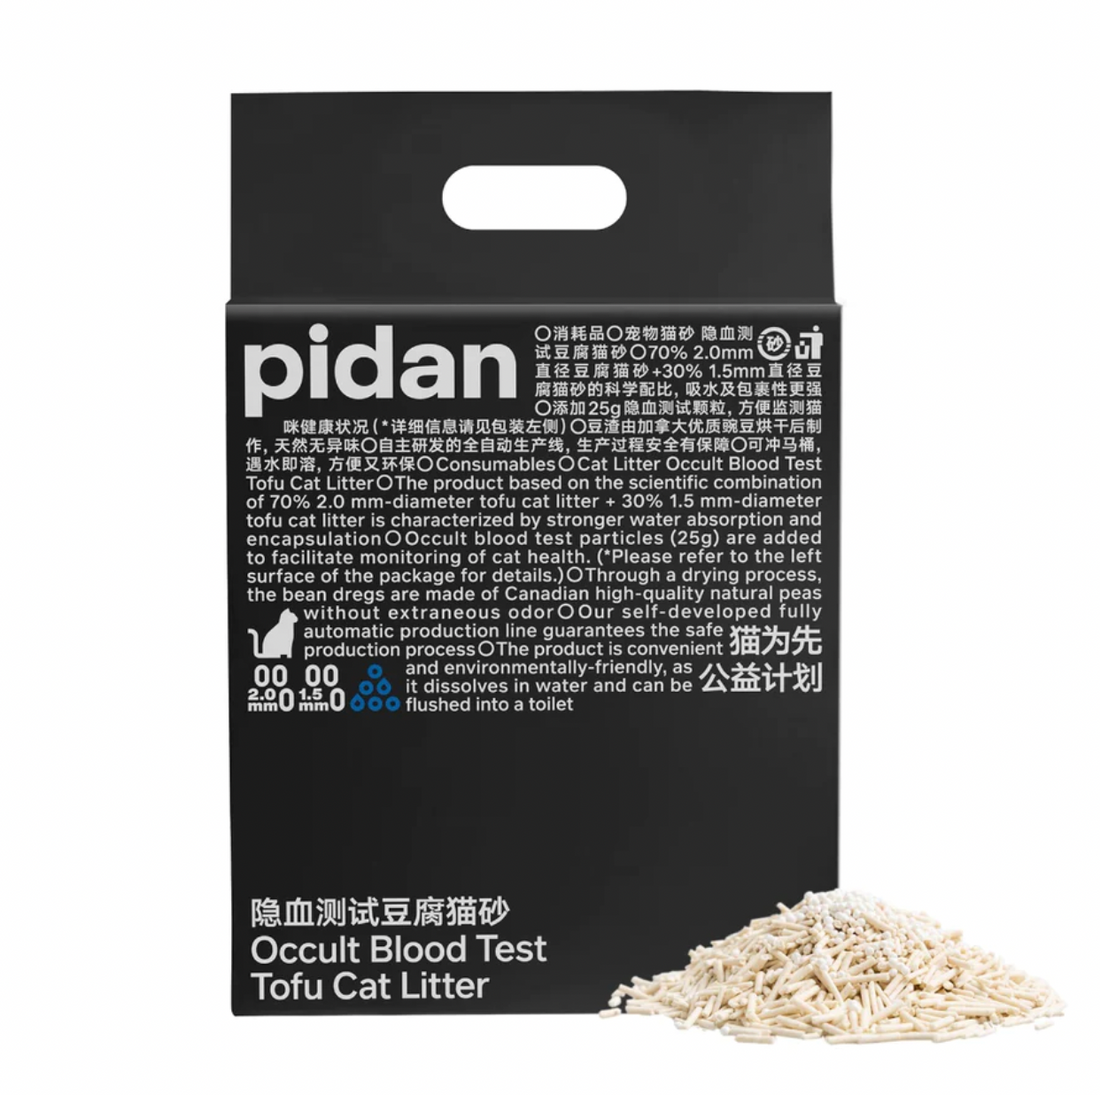 【PIDAN】原味豆腐猫砂 - 6L (在家帮助自检, 提示猫咪健康隐患)